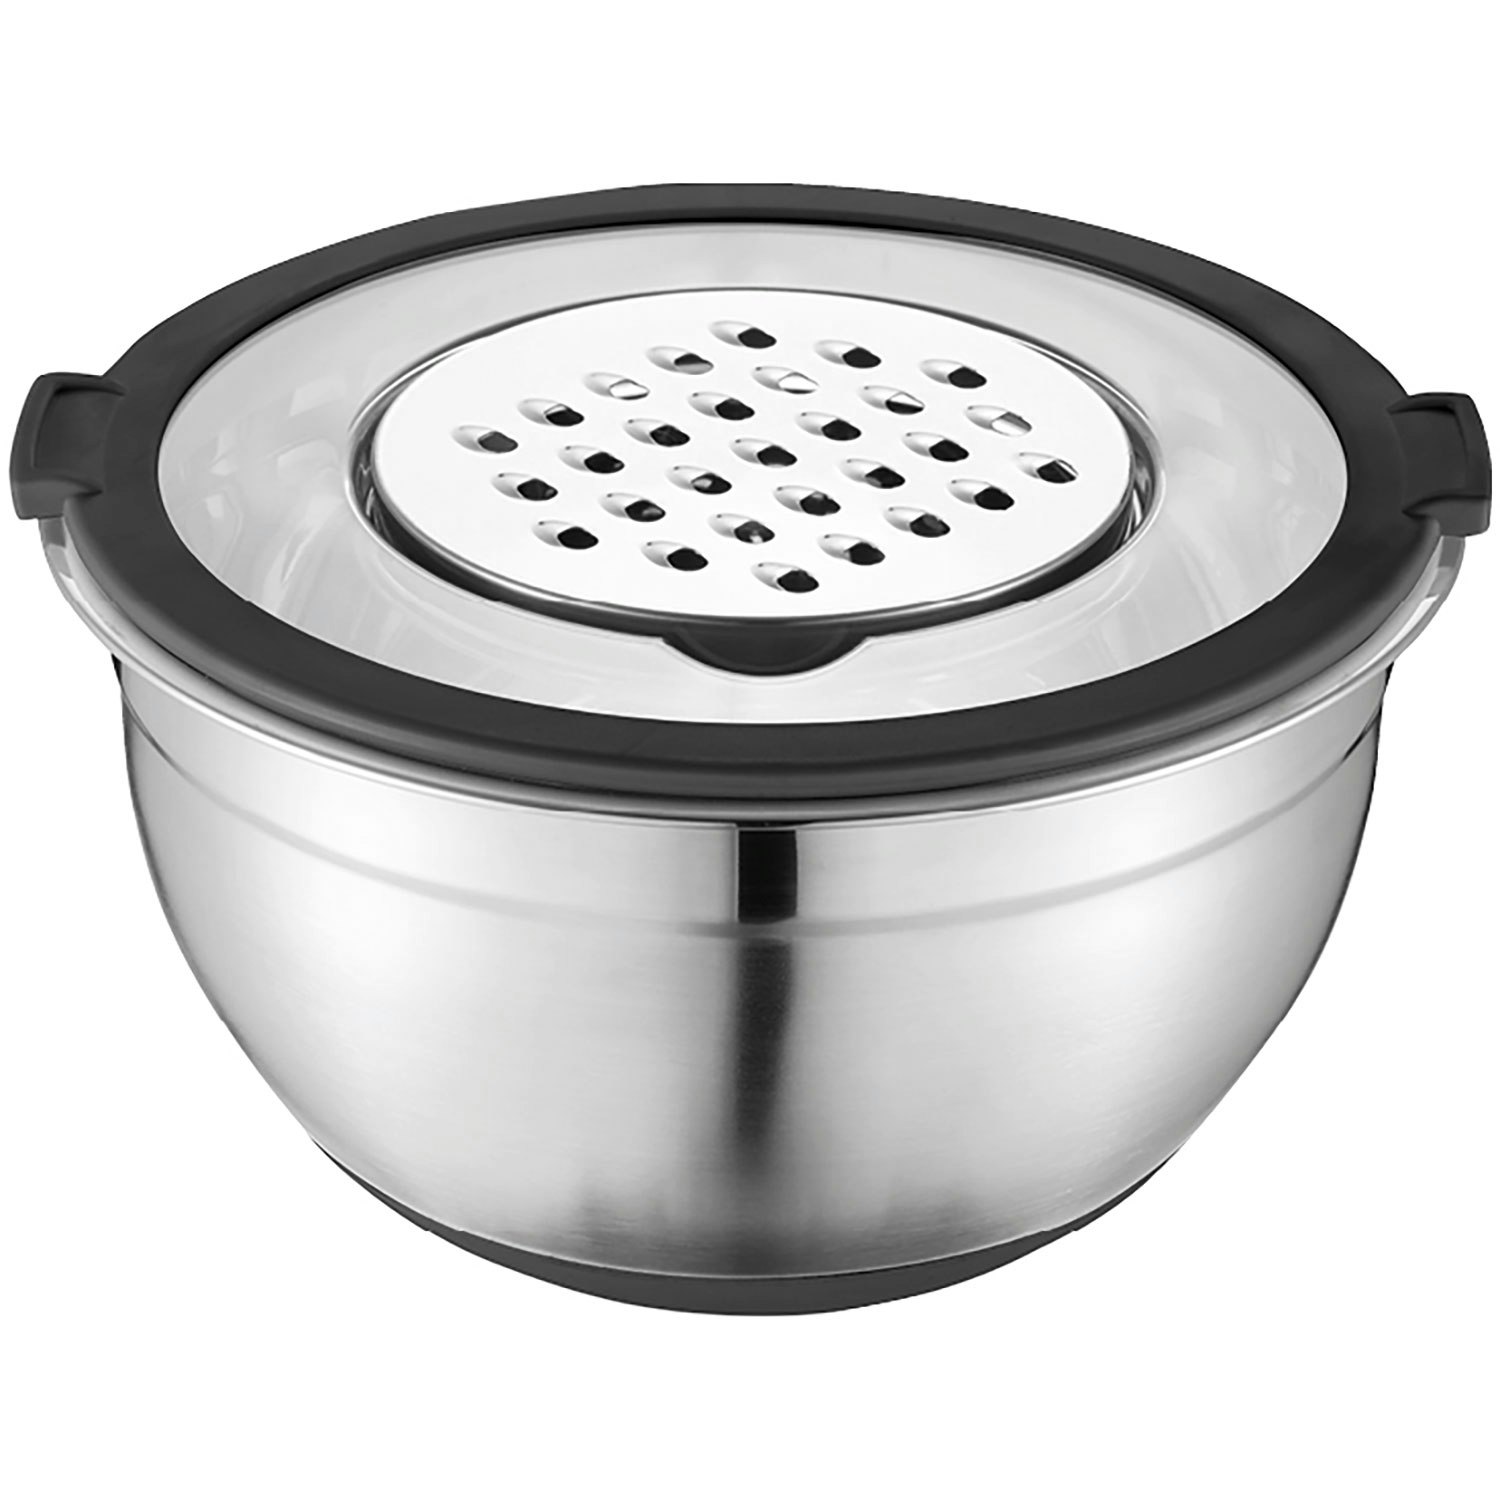 https://royaldesign.com/image/2/dorre-better-bowl-stainless-steel-w-lid-3-grater-2